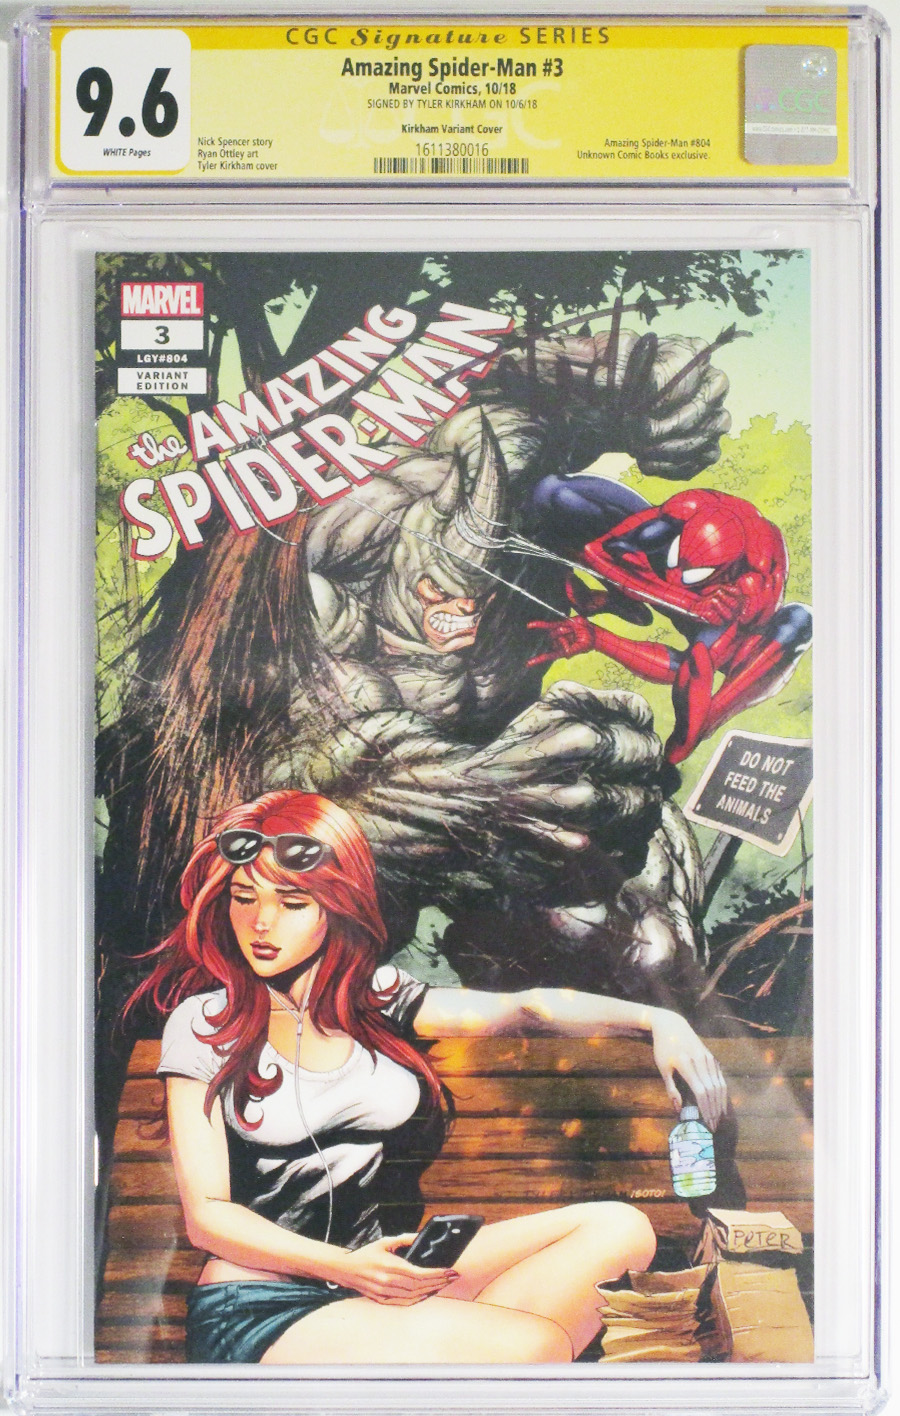 Amazing Spider-Man Vol 5 #3 Cover F Tyler Kirkham Variant CGC Signature Series 9.6 Signed by Tyler Kirkham